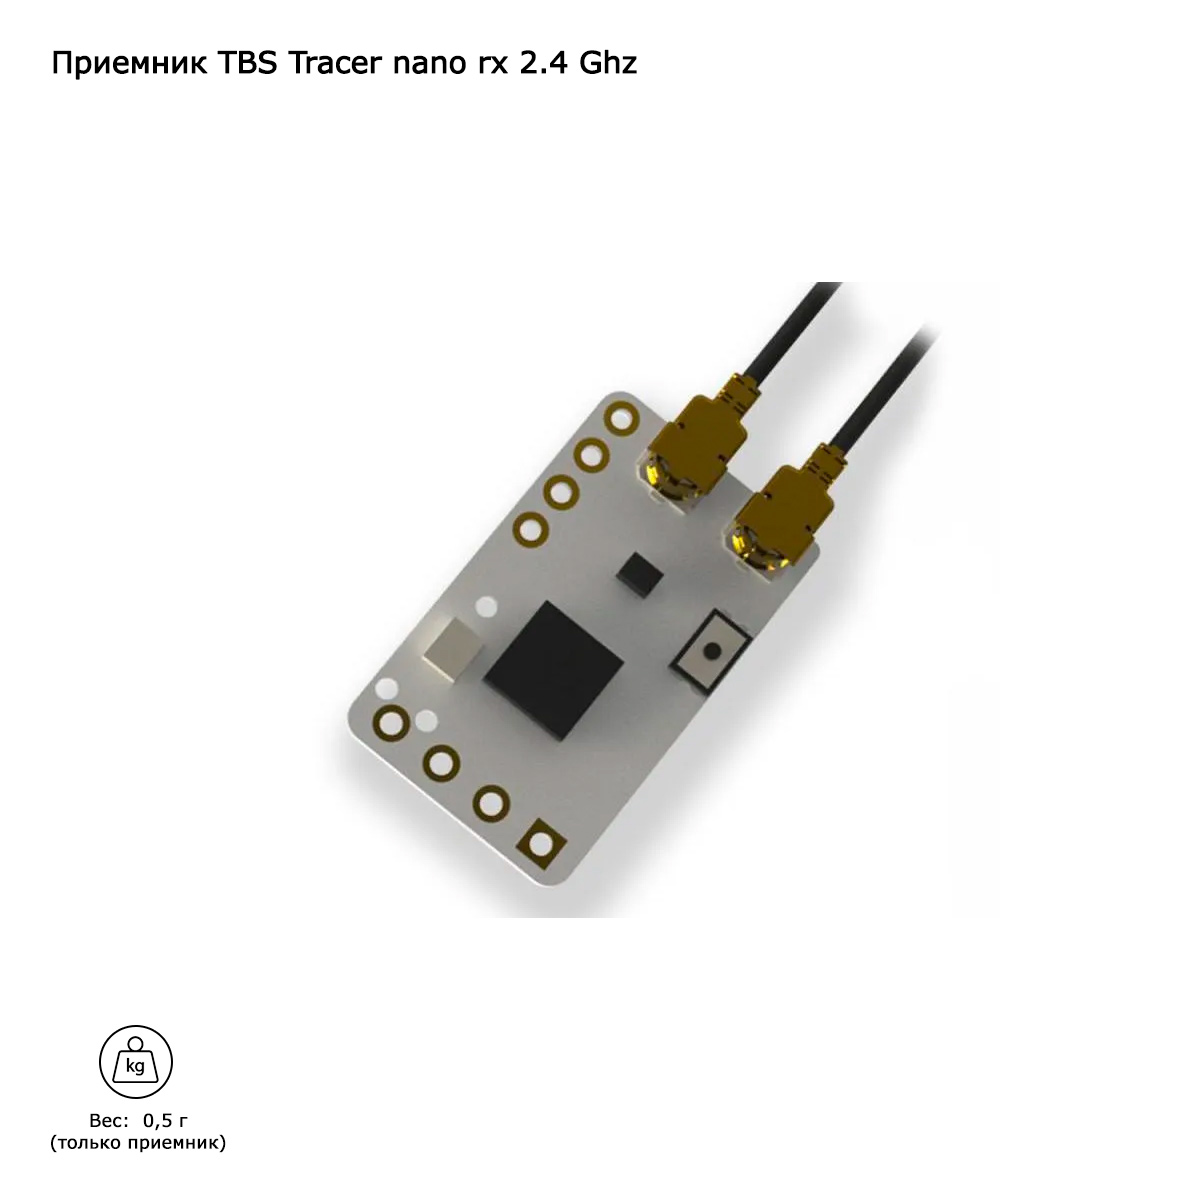 Приемник TBS Tracer nano rx 2.4 Ghz